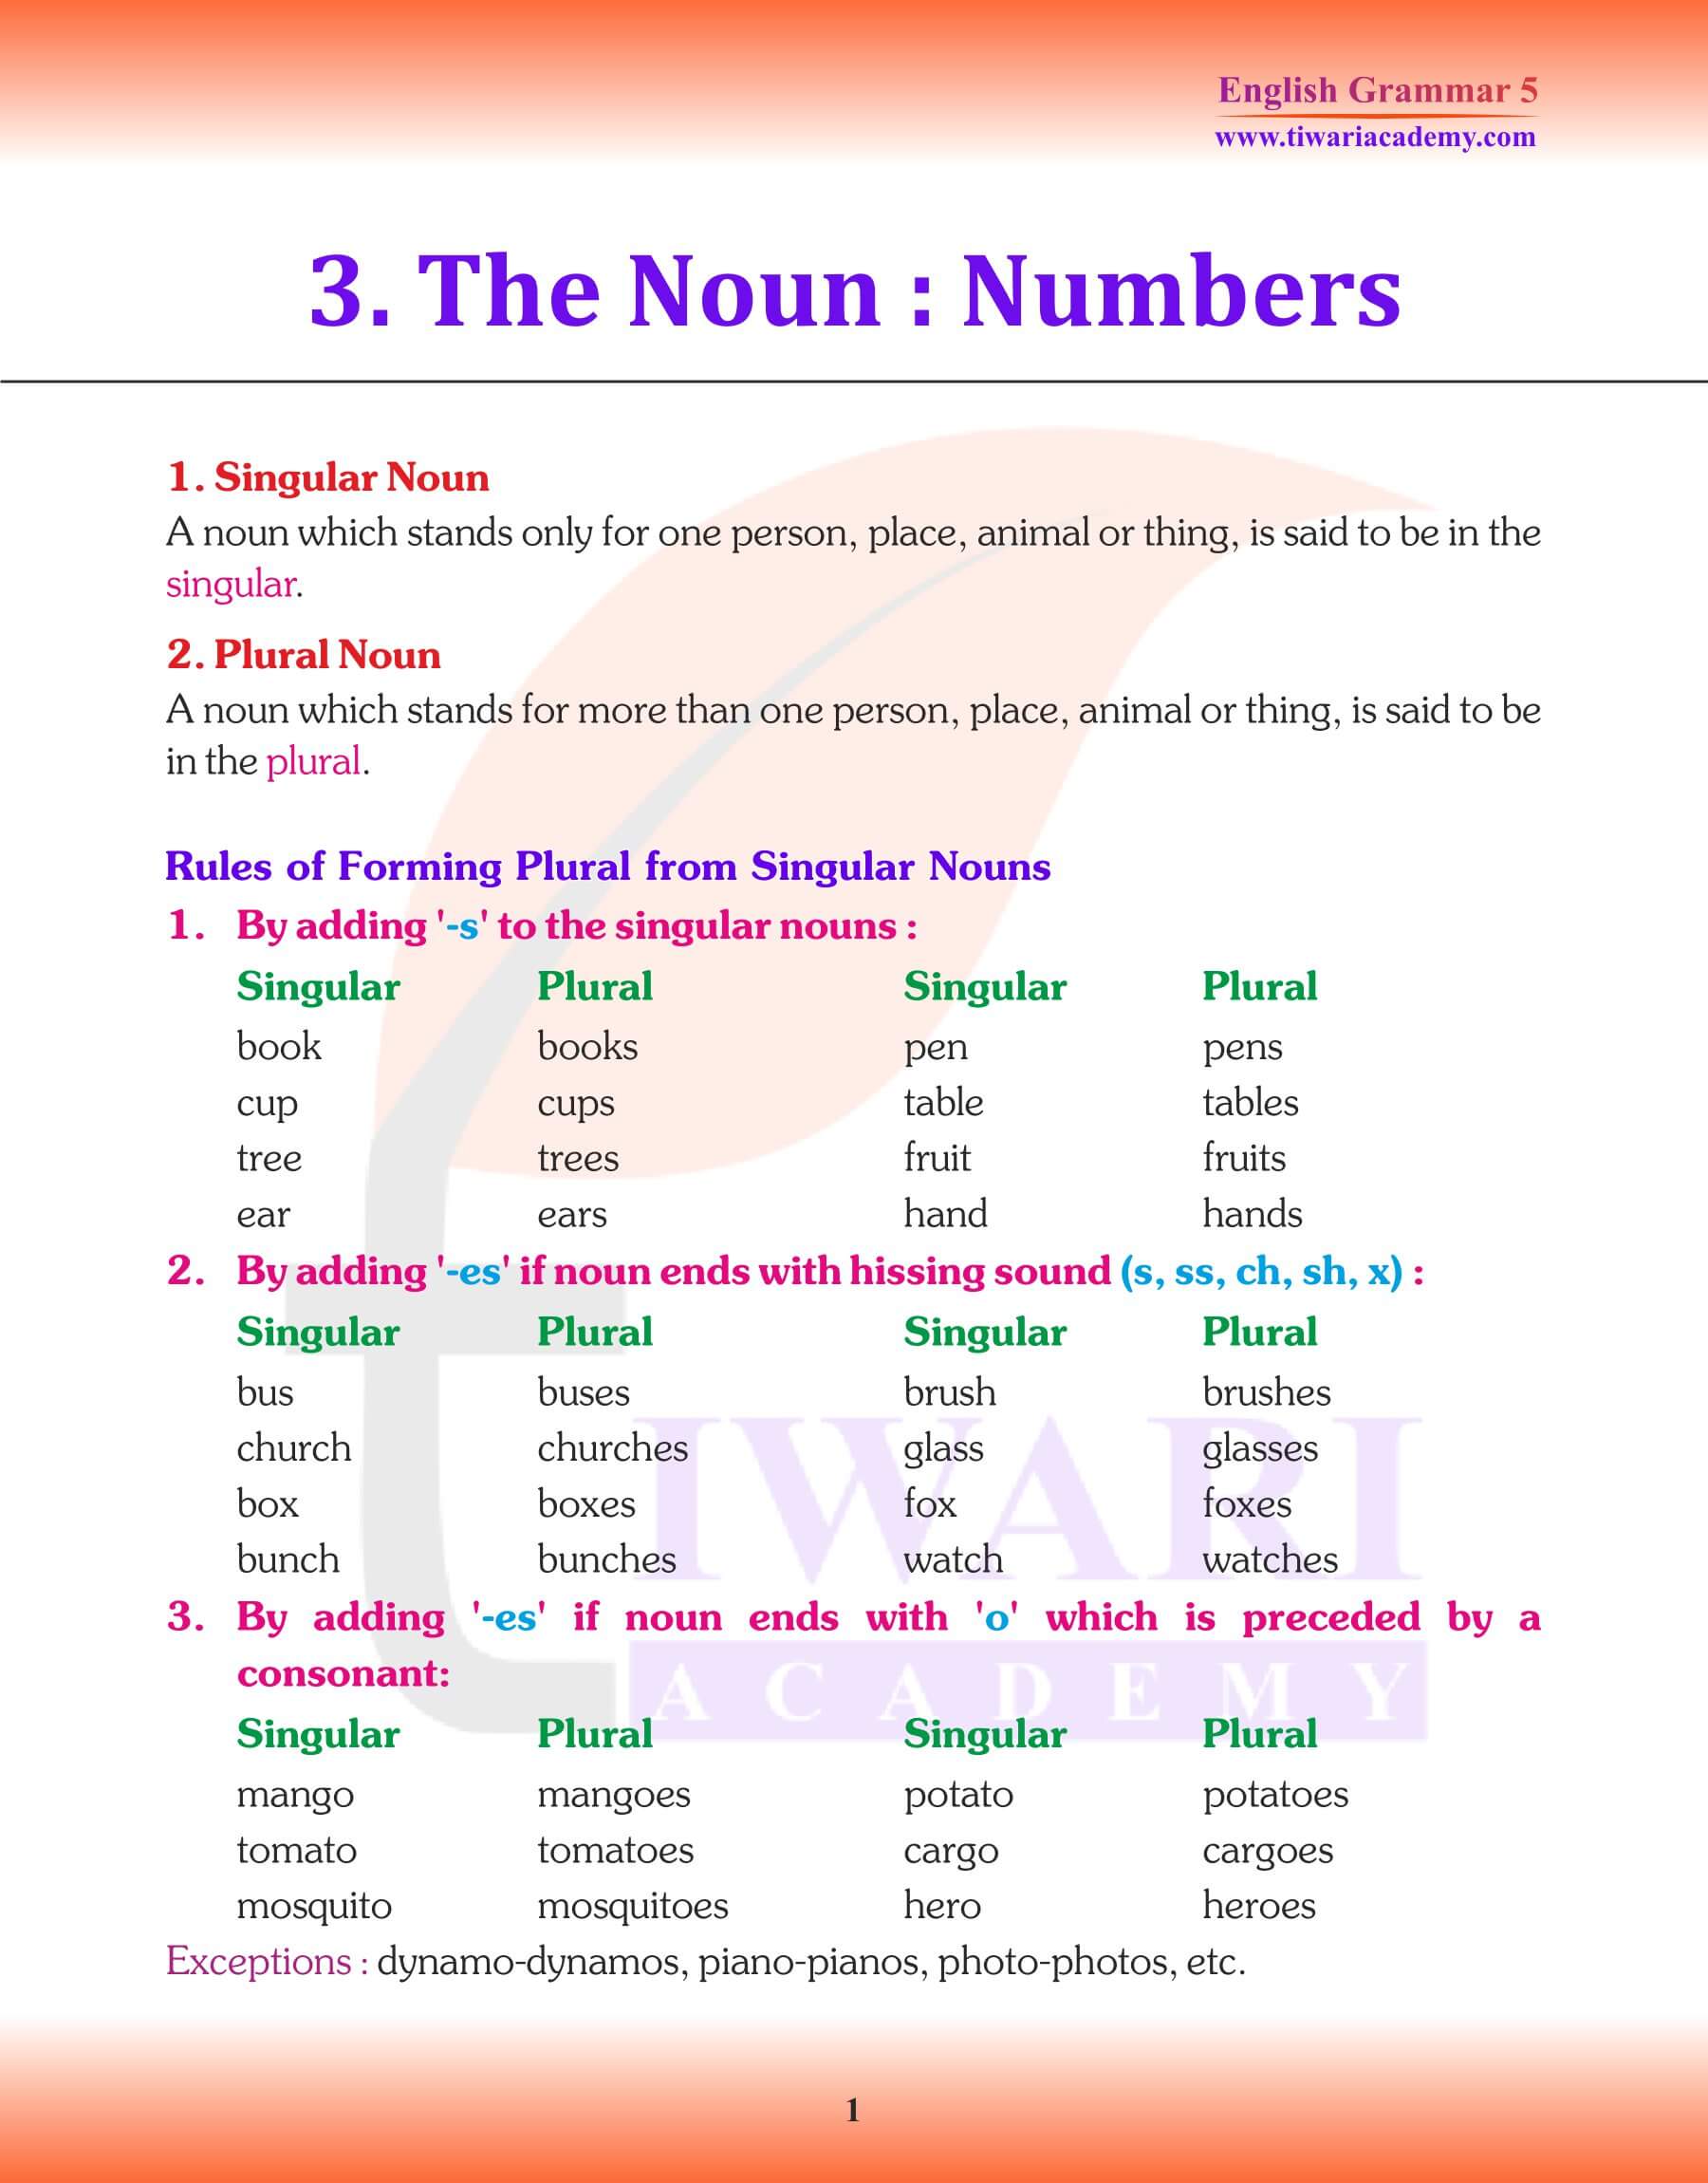 Class 5 English Grammar Noun Number Revision Book